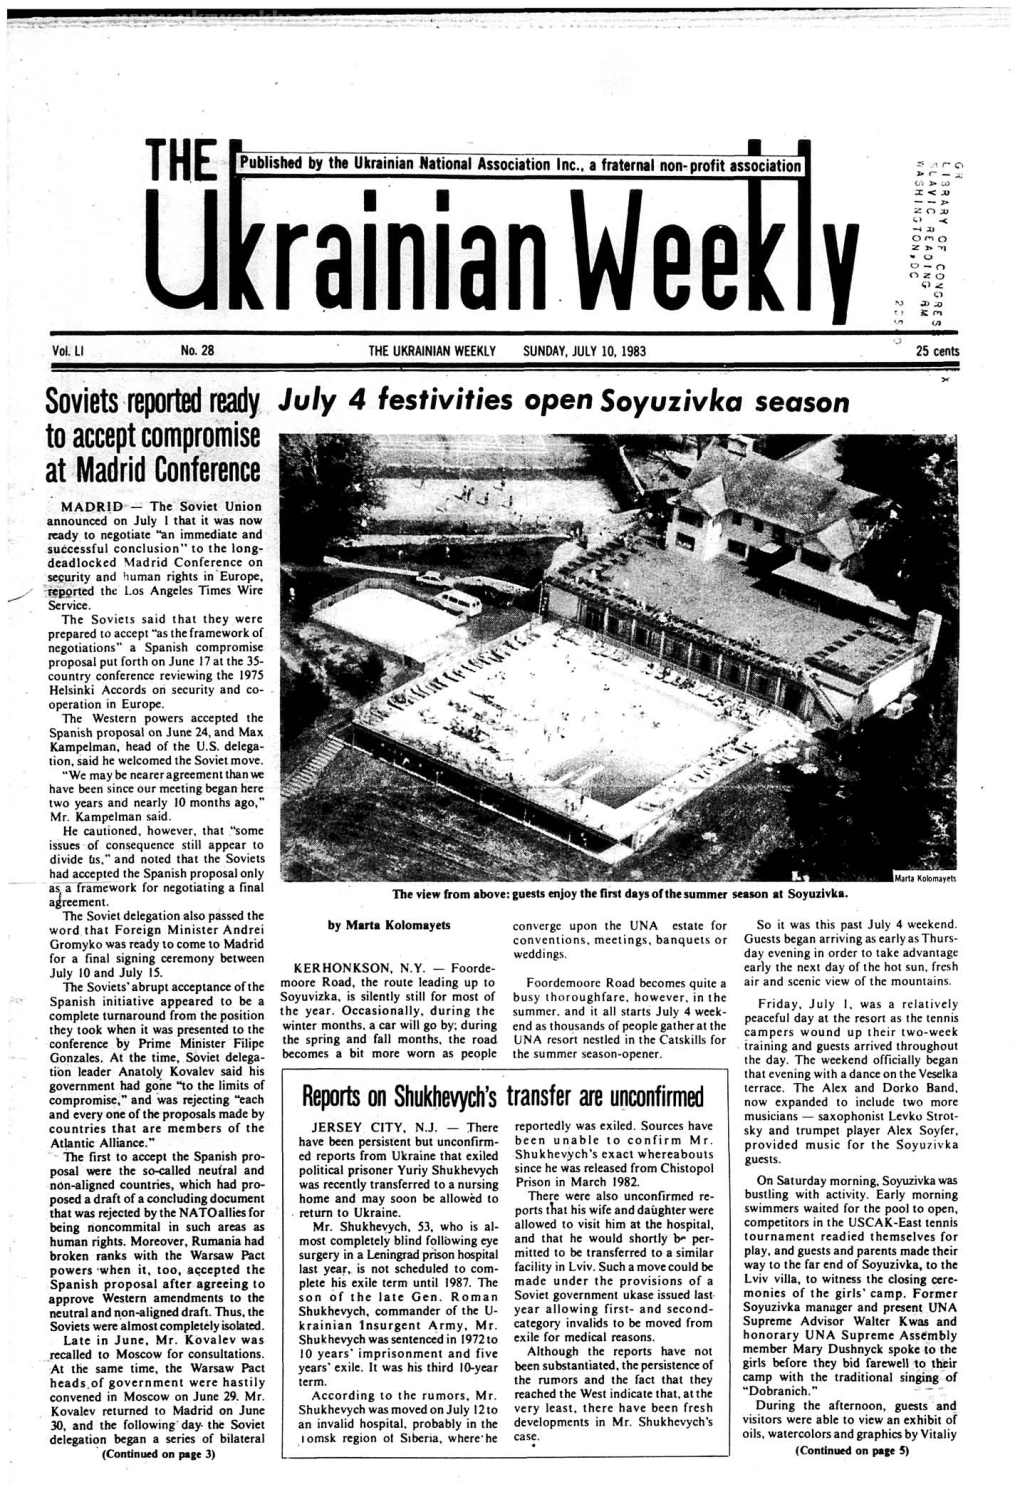 The Ukrainian Weekly 1983, No.28